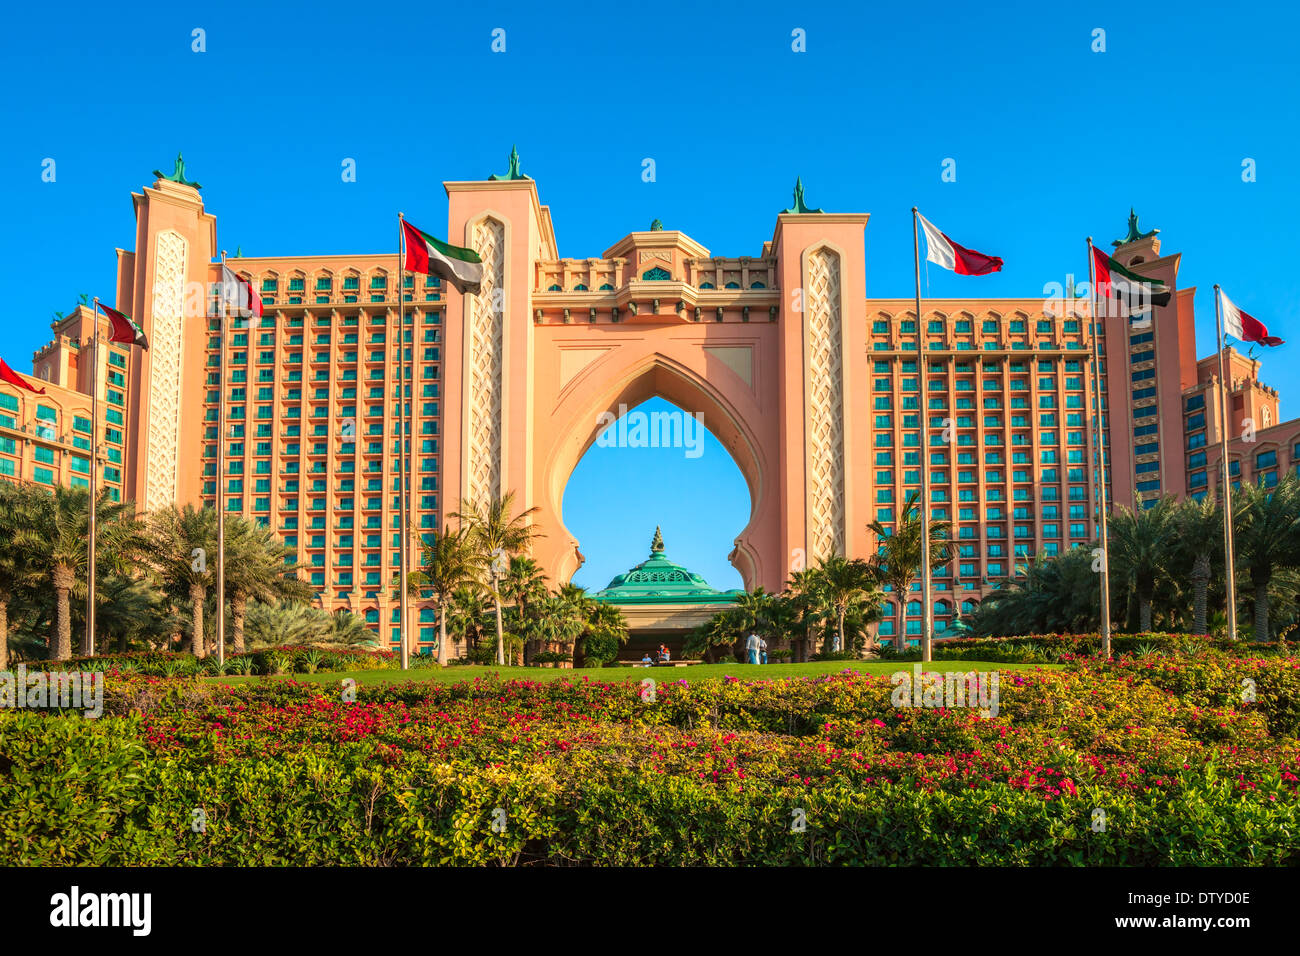 Atlantis the palm hotel, Dubai, UAE. Stock Photo